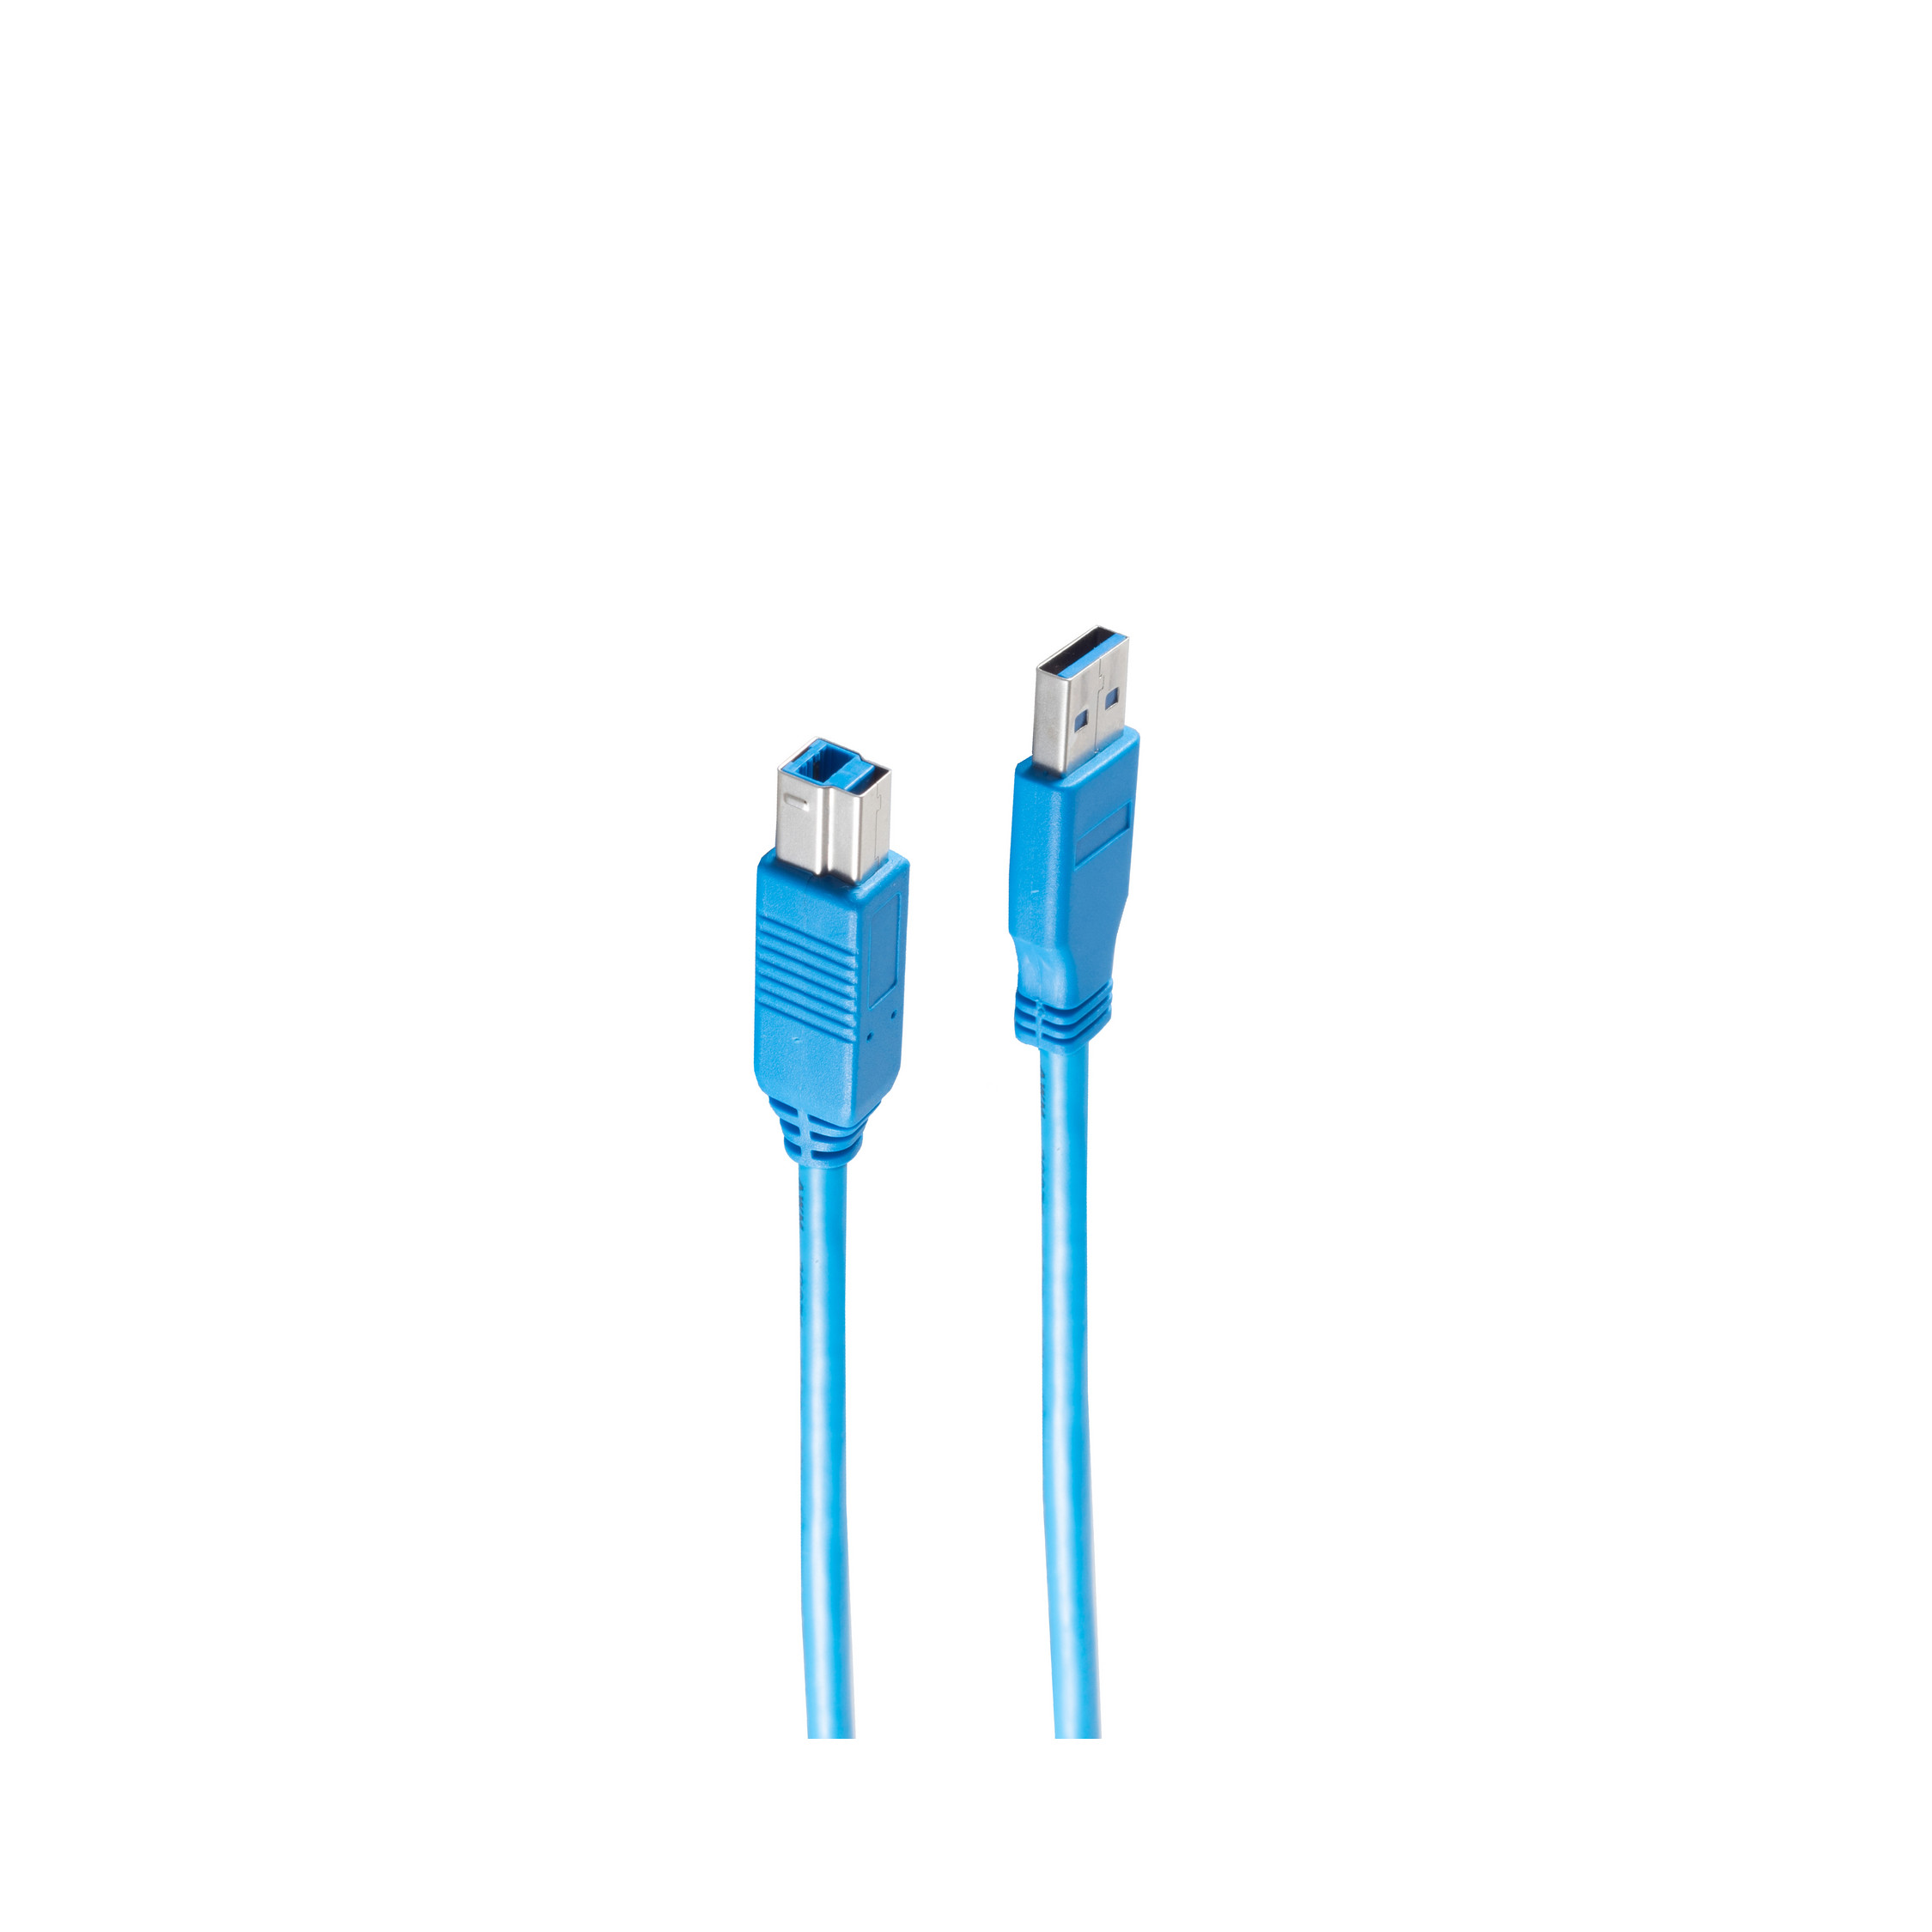 A Kabel USB B / Stecker USB 5m SHIVERPEAKS 3.0 USB Stecker blau Kabel